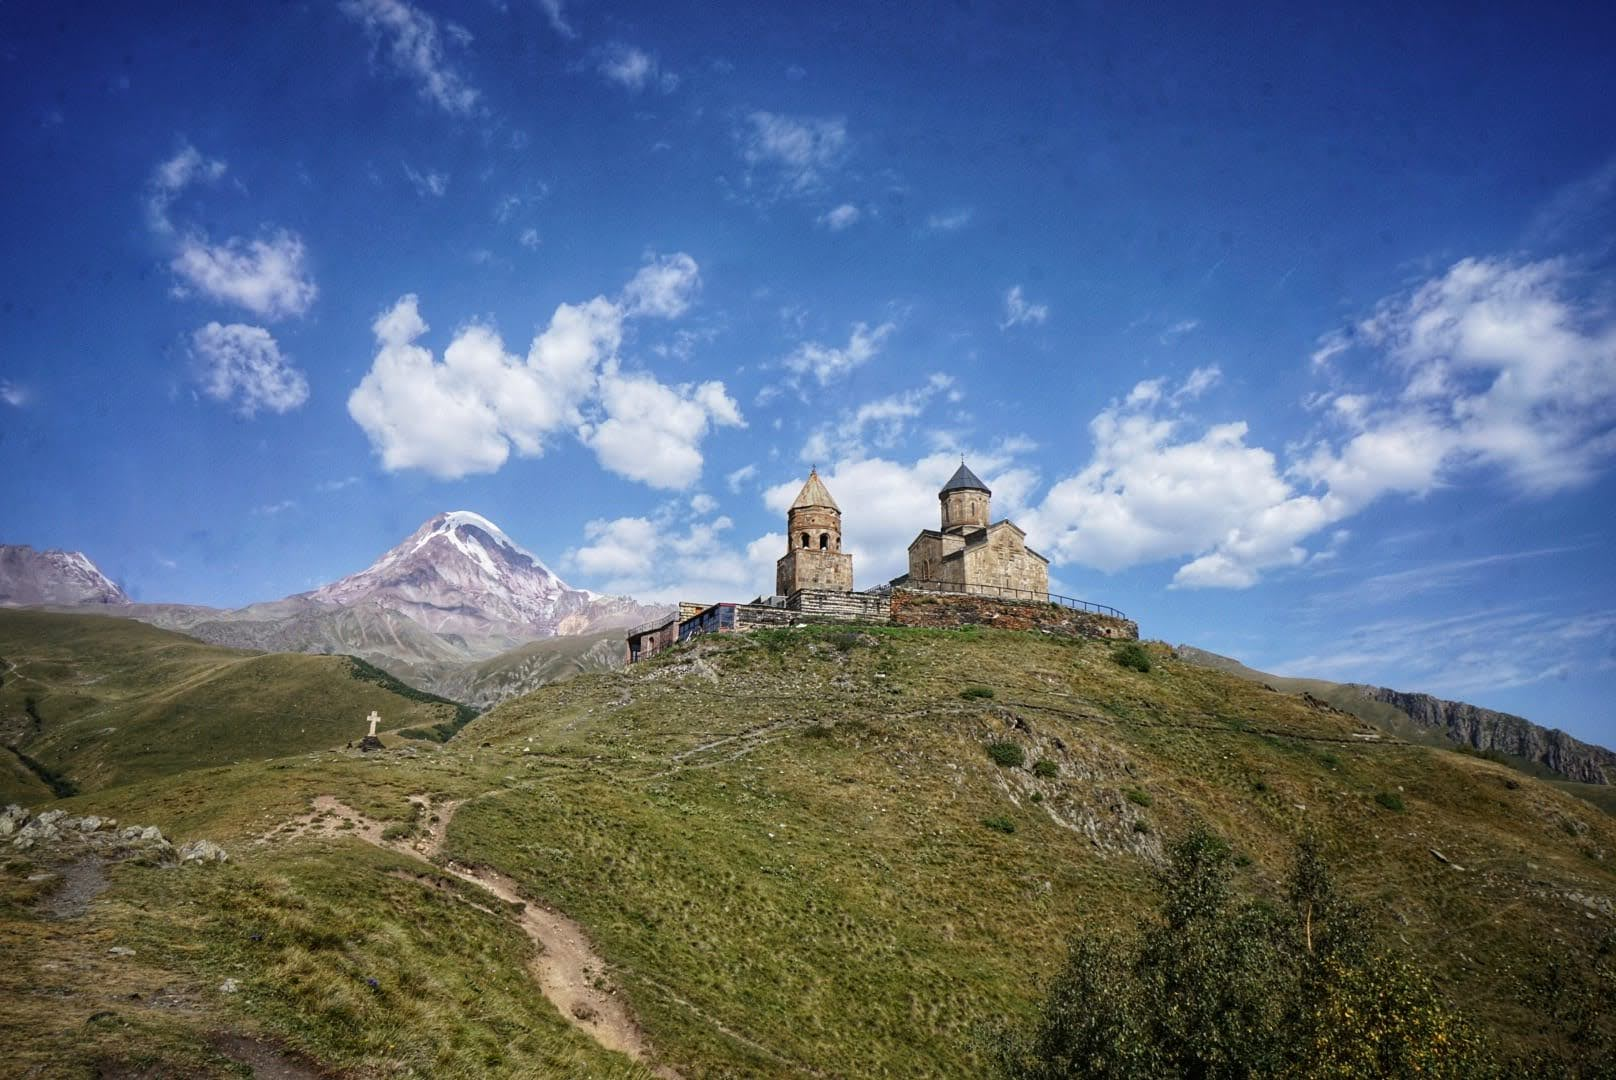 Gergeti Trinity Church against the backdrop of mountains in Kazbegi